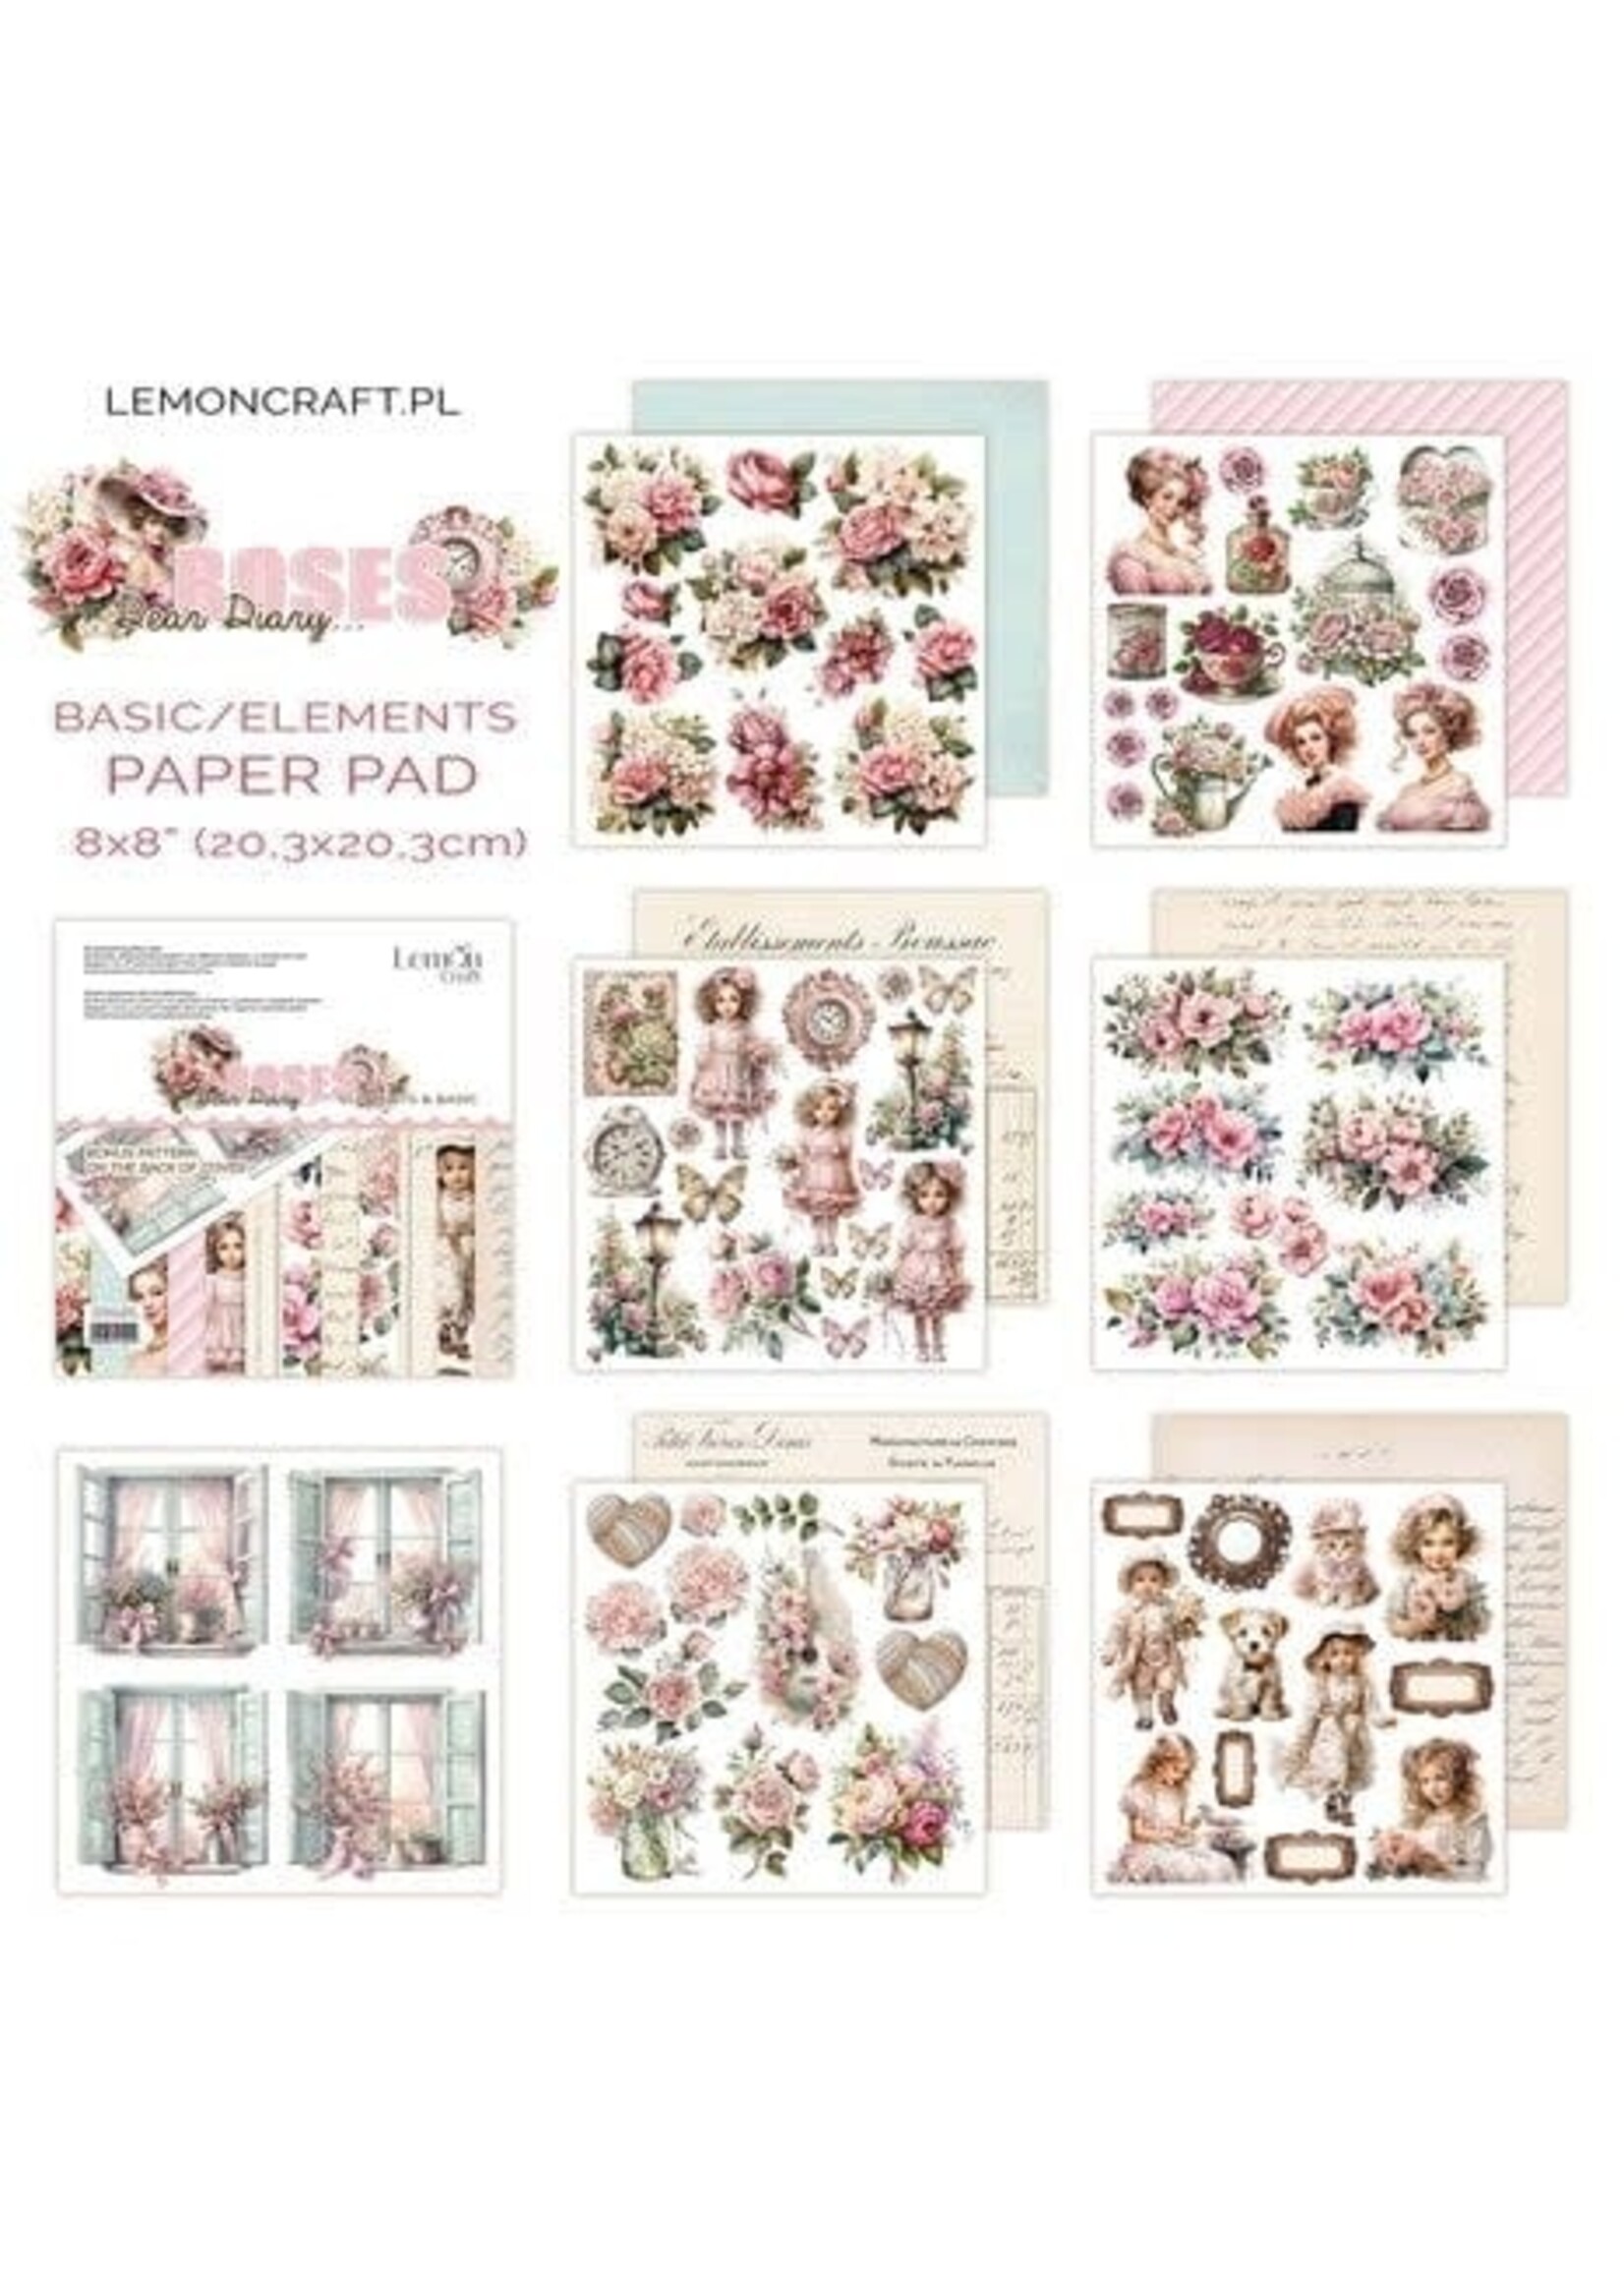 Lemon Craft Dear Diary Roses Elements & Basics 8x8 Inch Paper Pad (LEM-DD-ROSES-03)